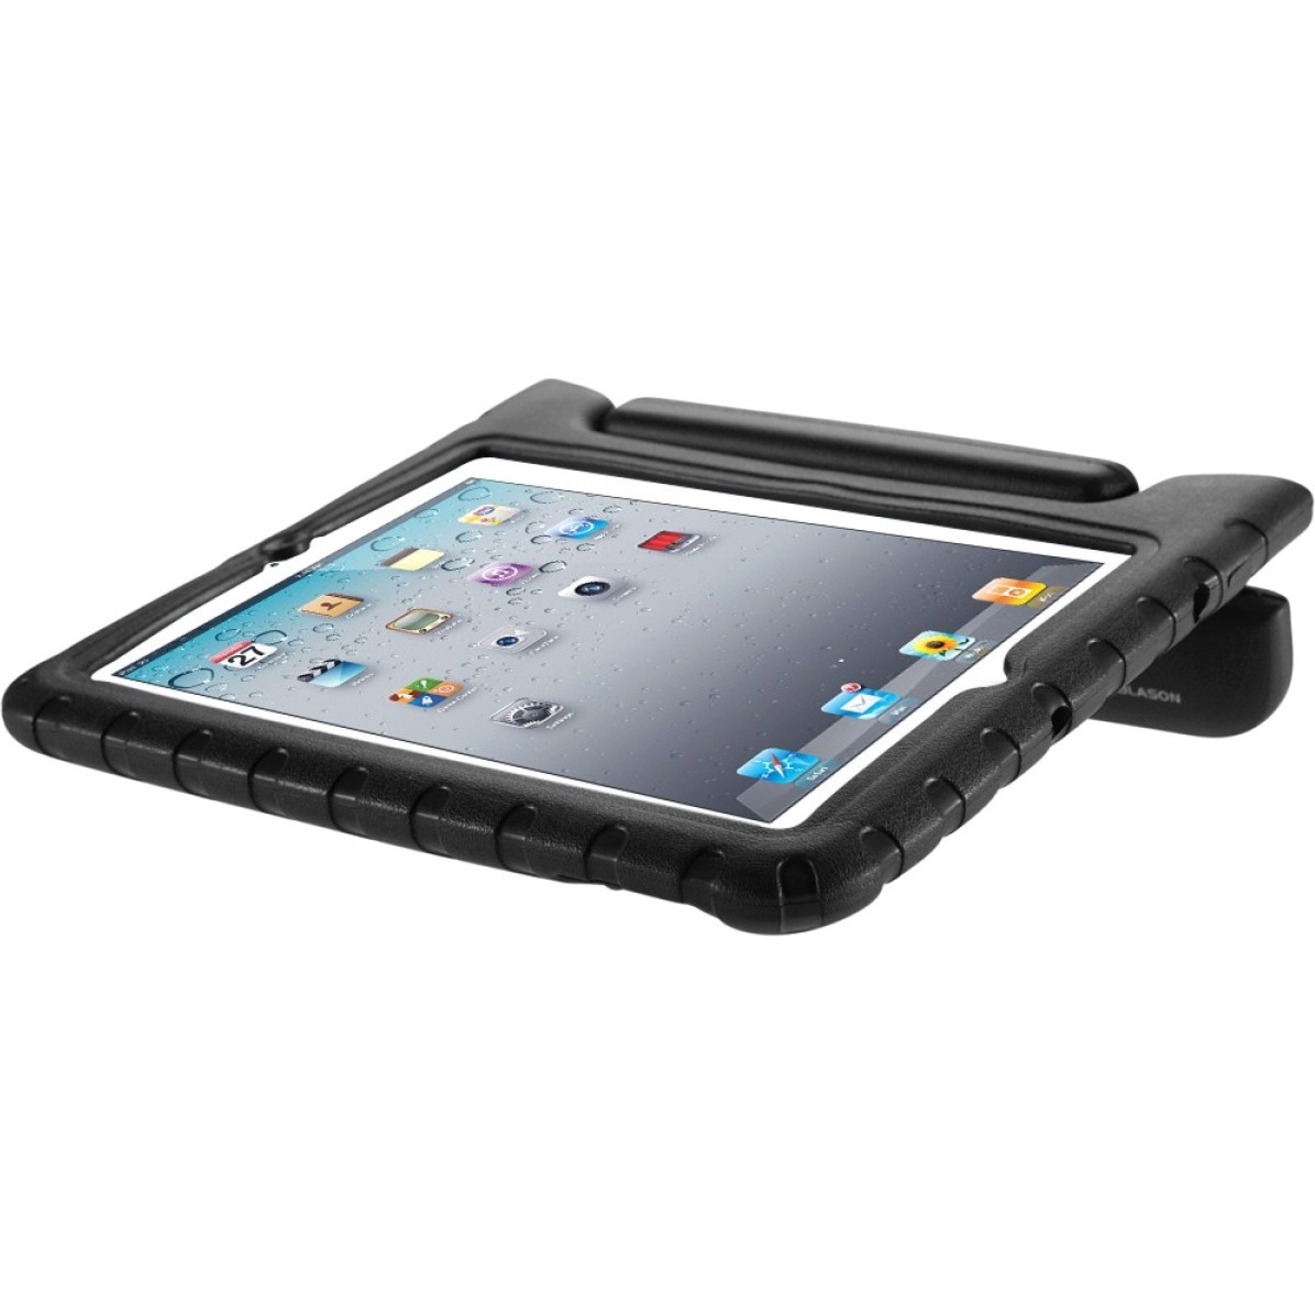 i-Blason Carrying Case Apple iPad 2, iPad (3rd Generation), iPad (4th Generation) Tablet, Black - image 4 of 5